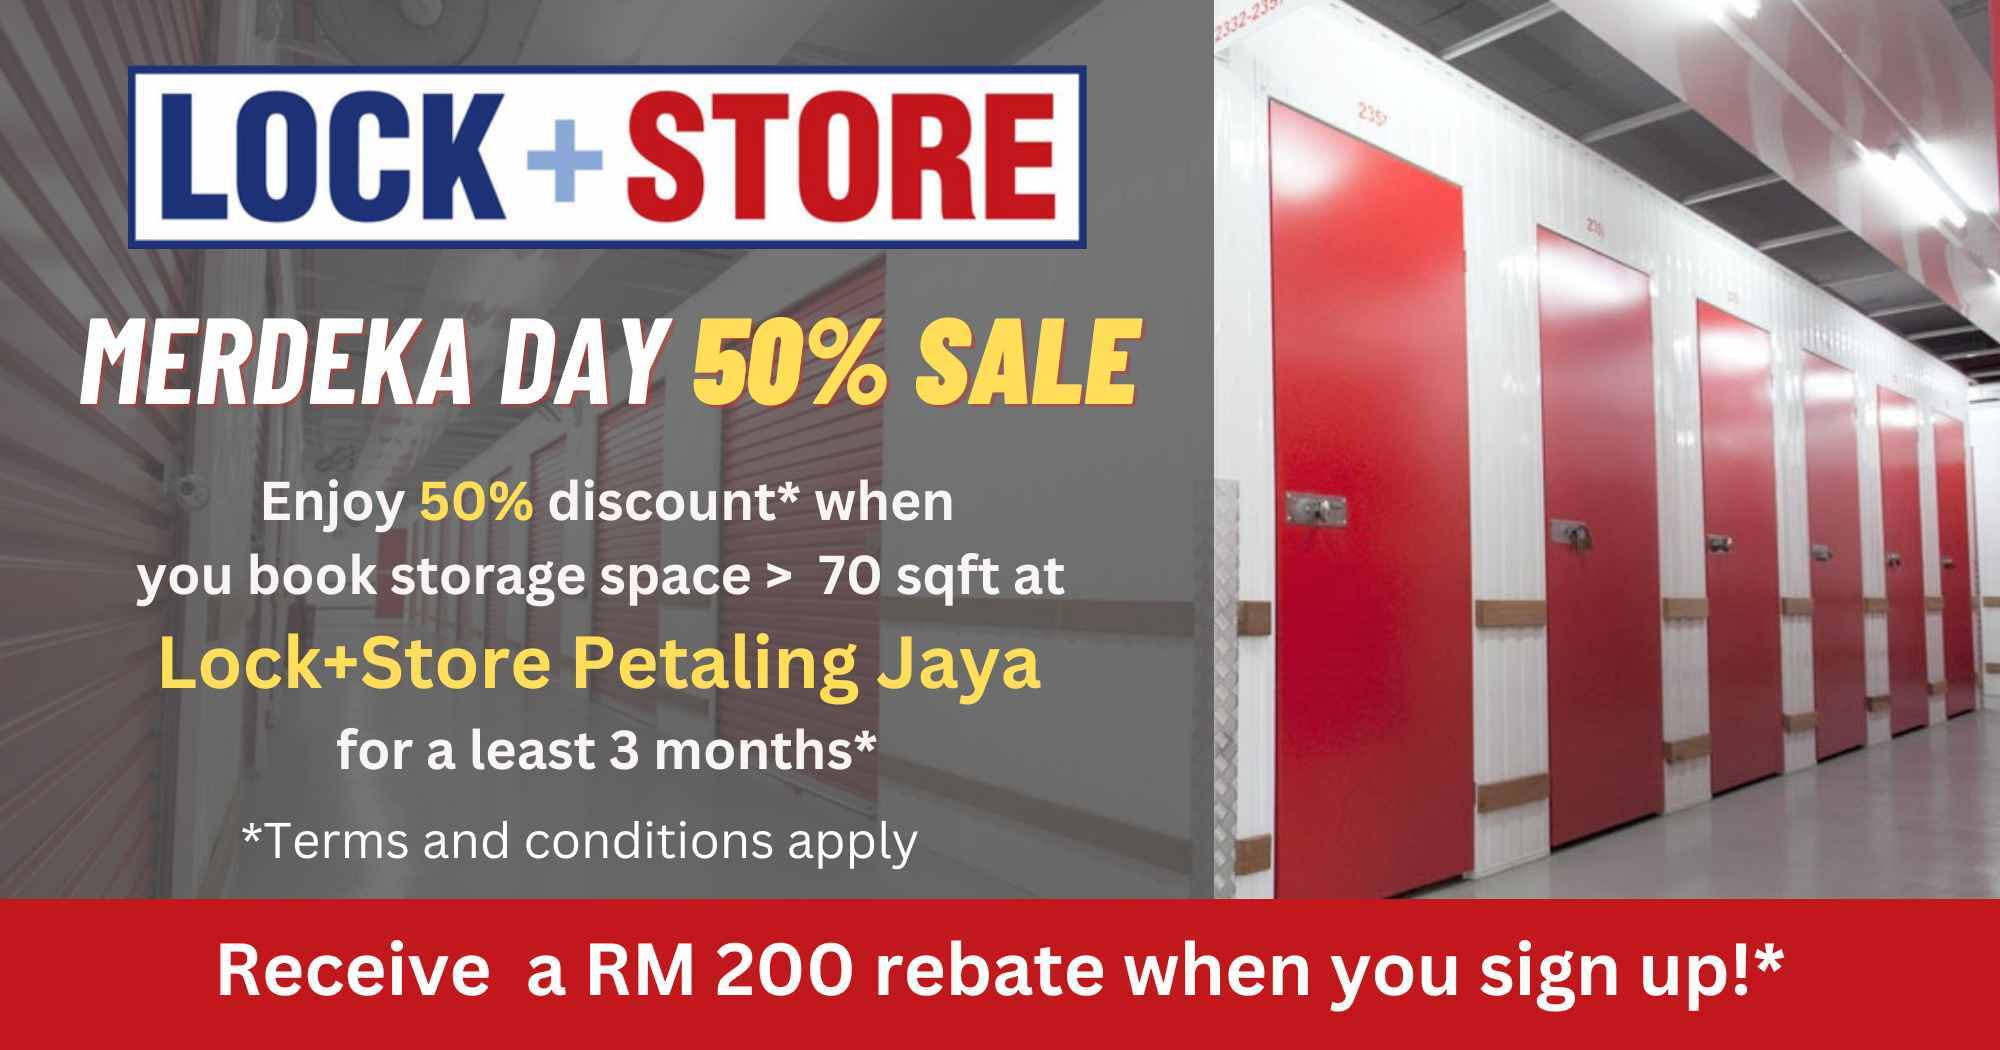 Lock+Store Petaling Jaya Merdeka Day Discount